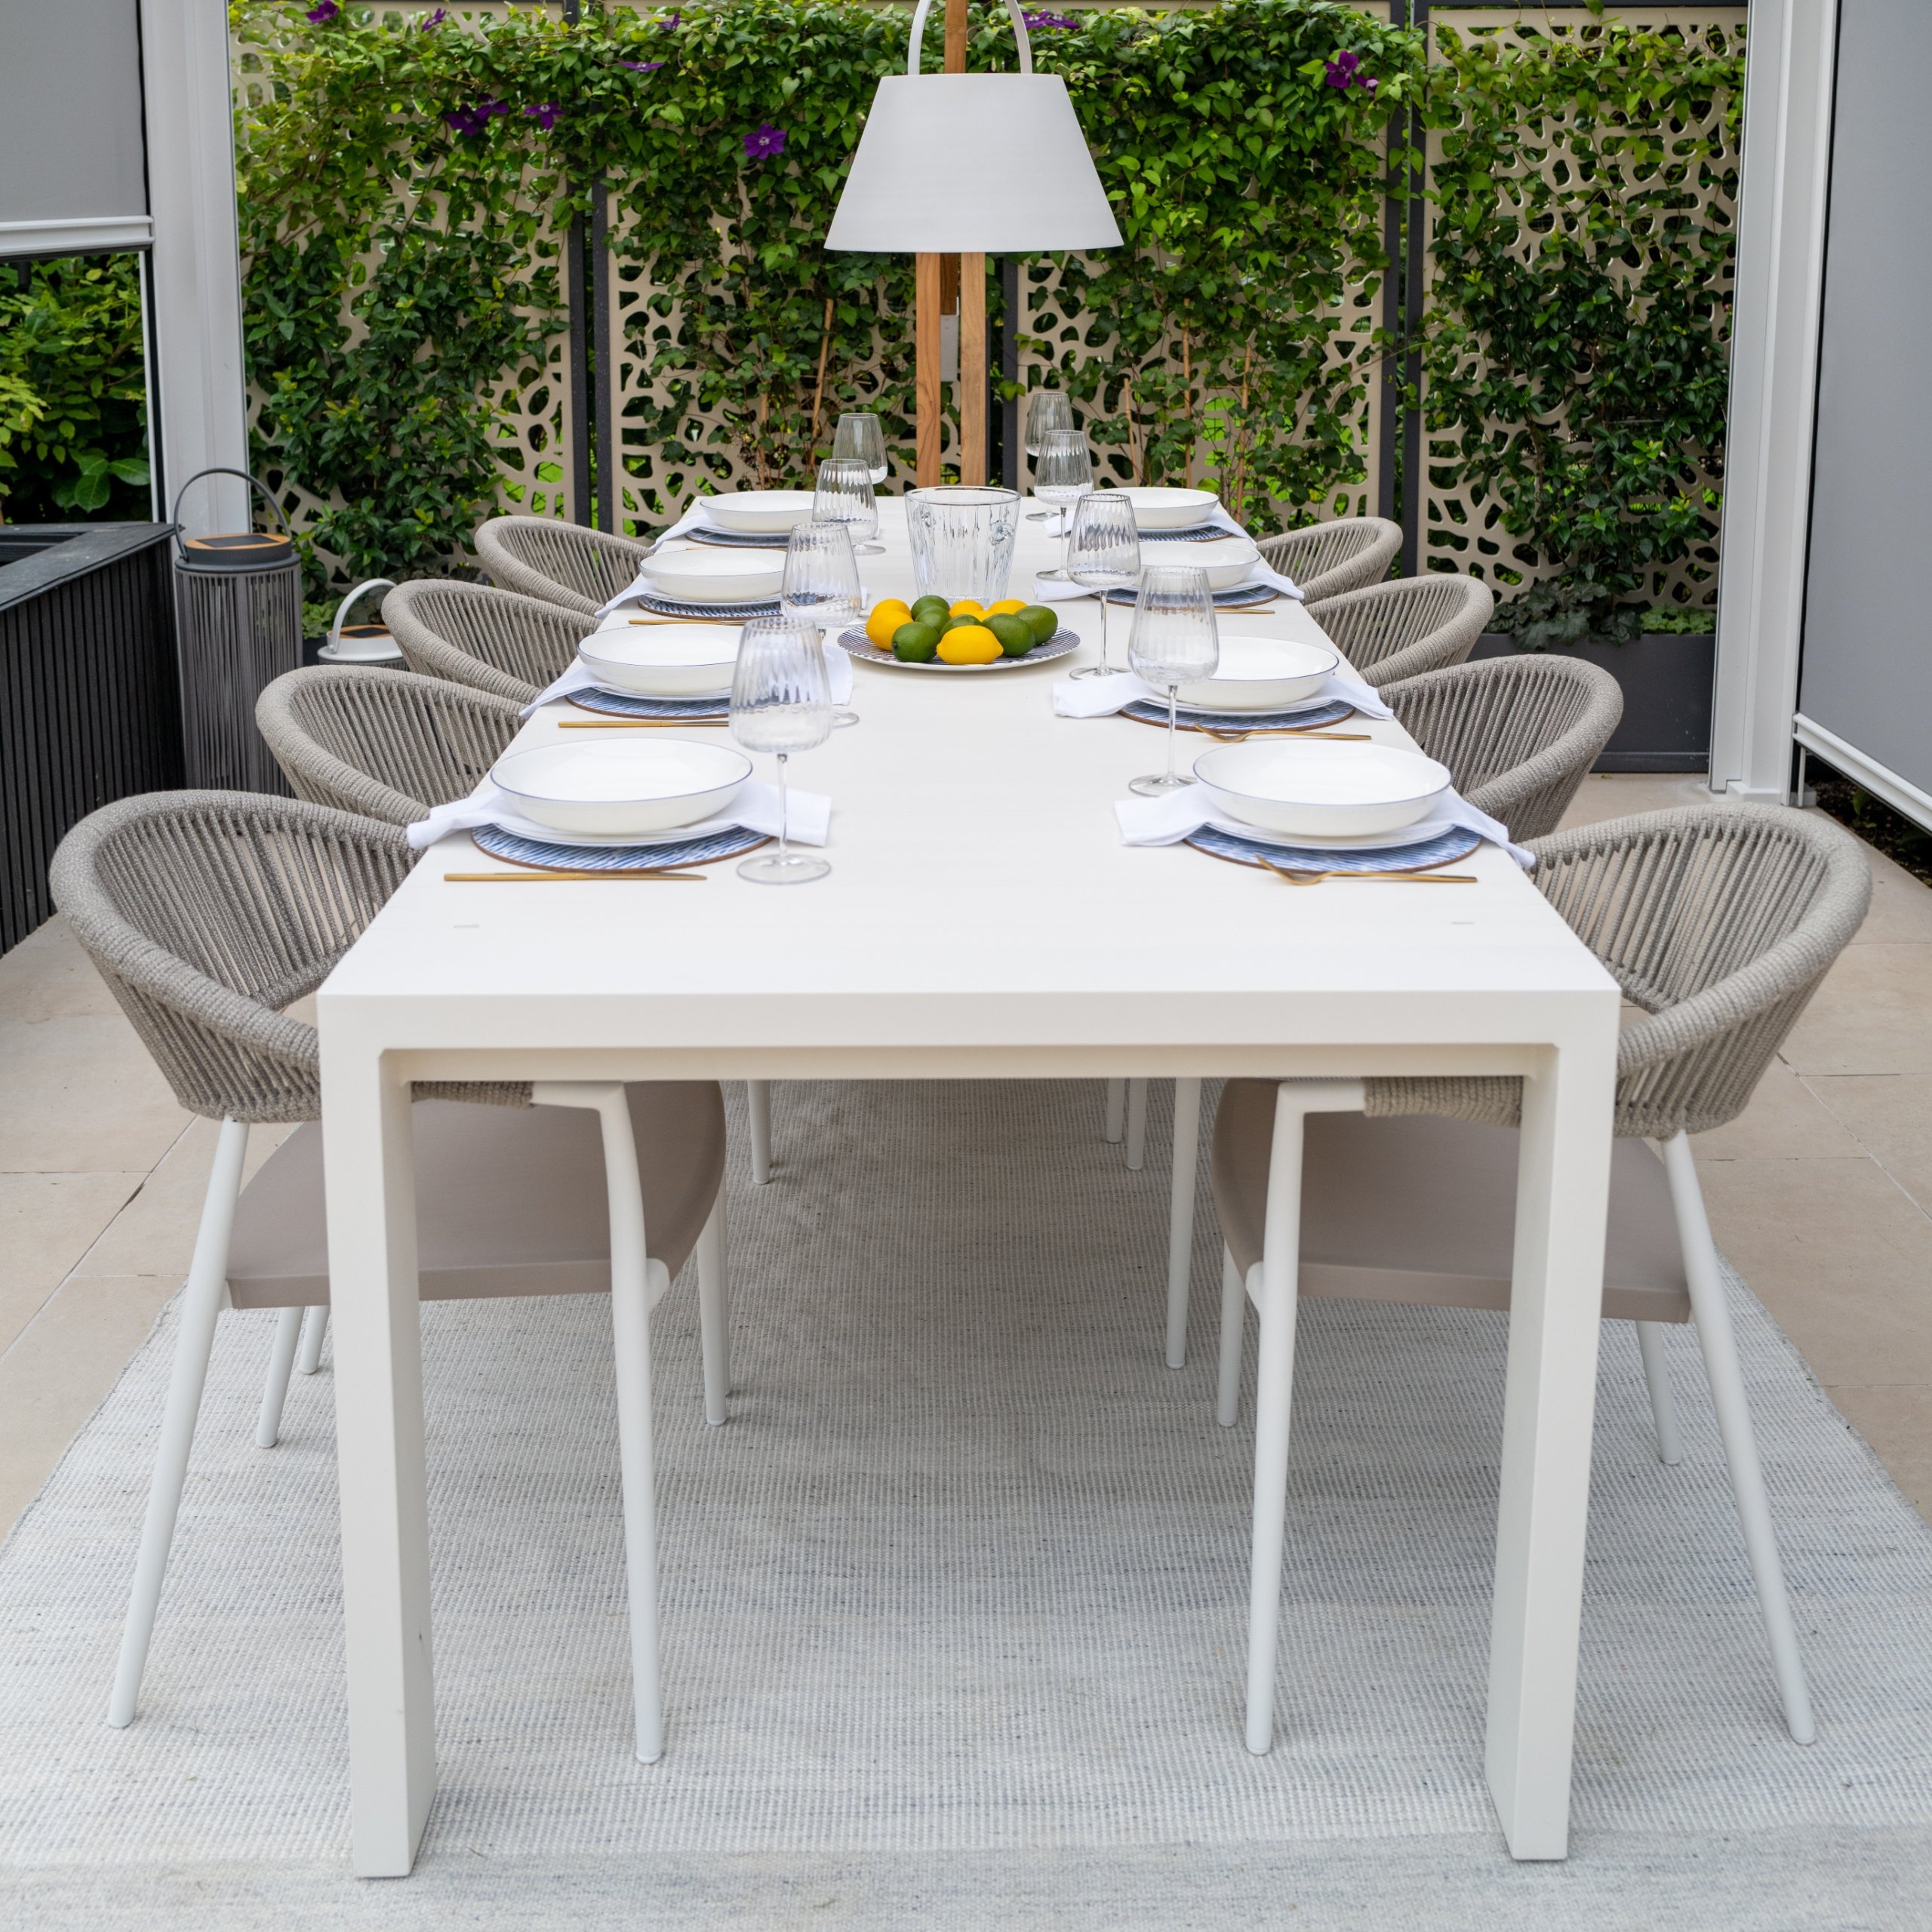 White Aluminum dining set from Suns Lifestyle